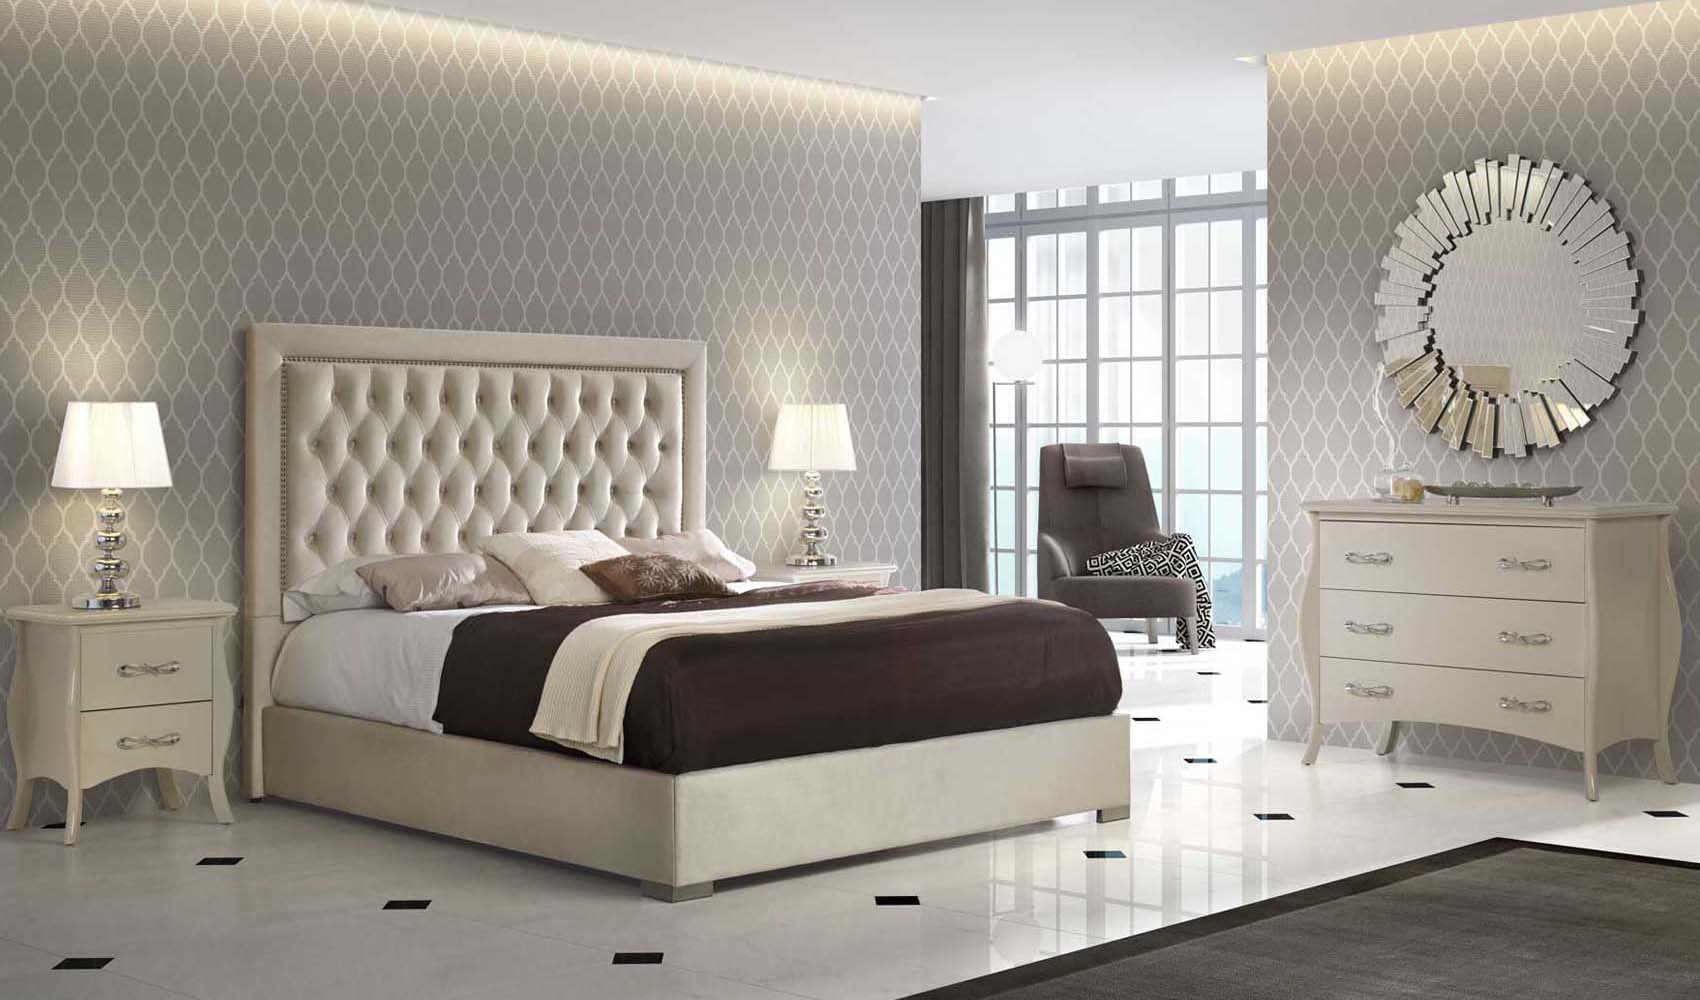 ebay uk cream bedroom furniture